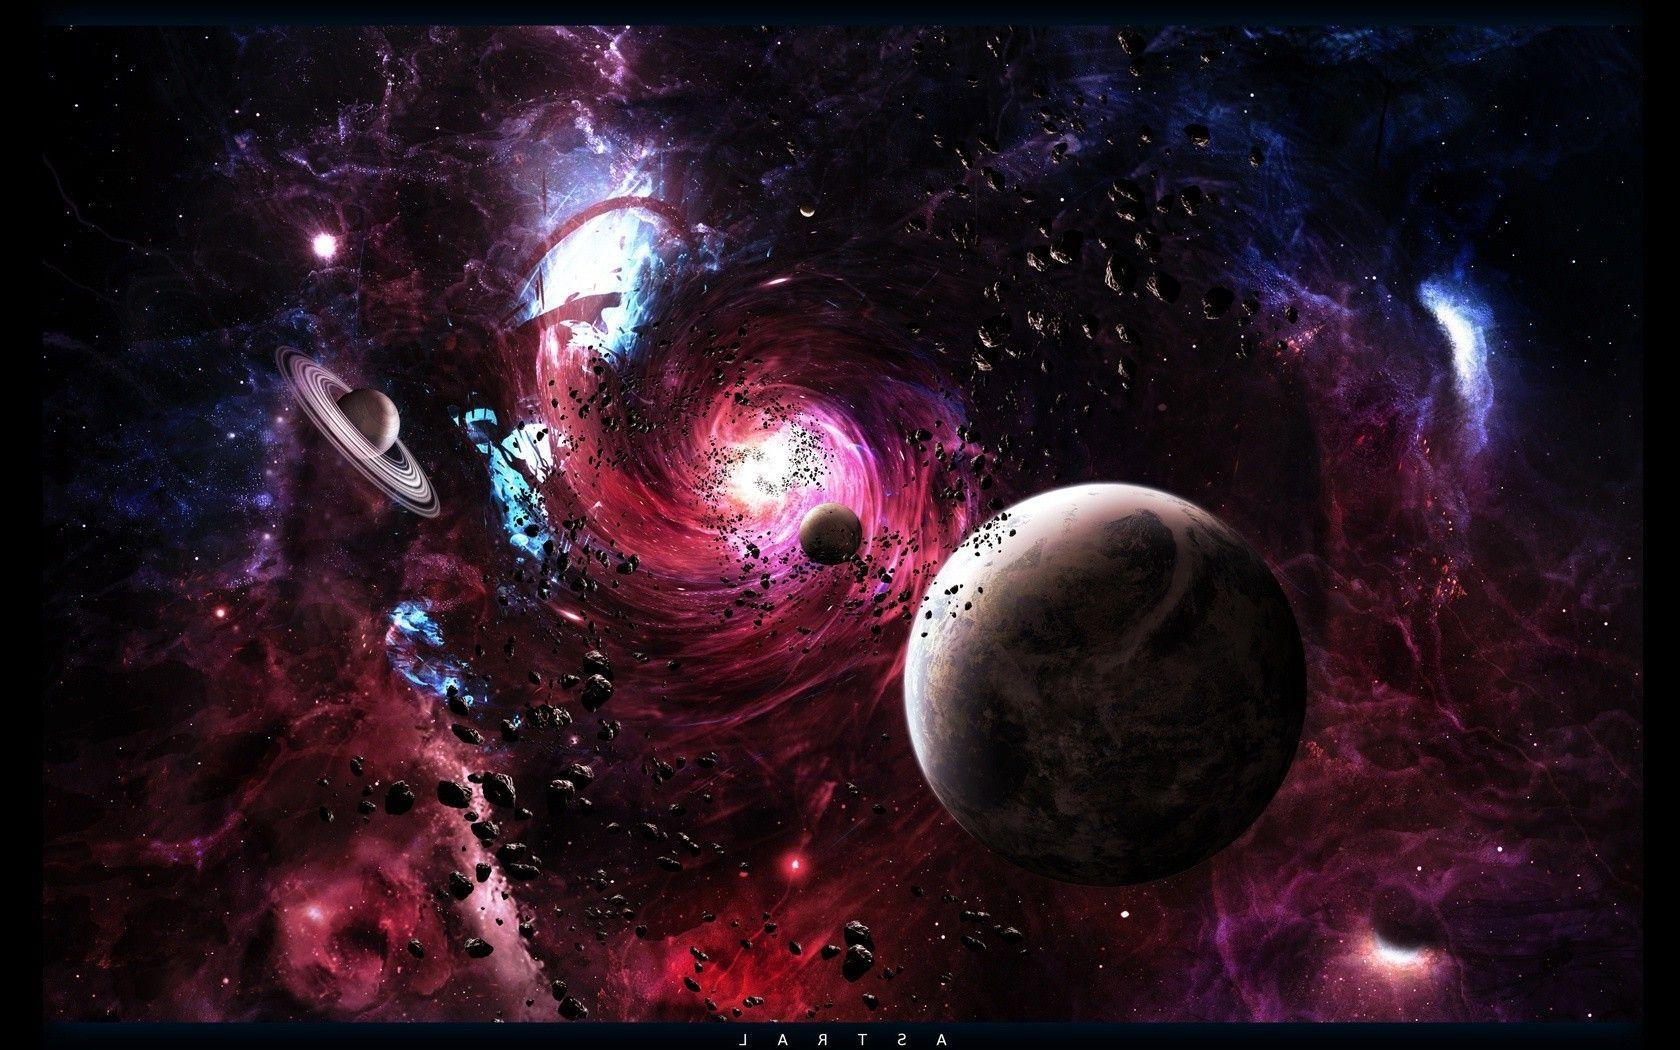 Black Galaxy Hd Wallpapers - Top Free Black Galaxy Hd Backgrounds